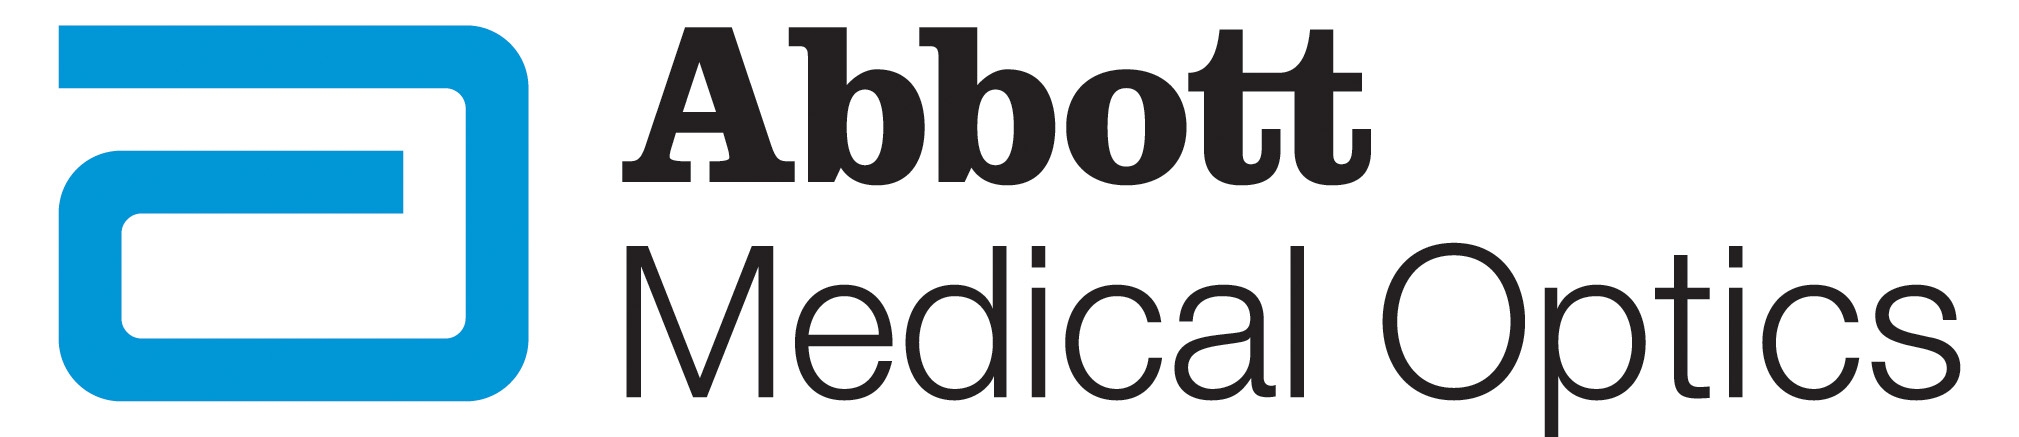 Abbott-Medical-Optics-Logo